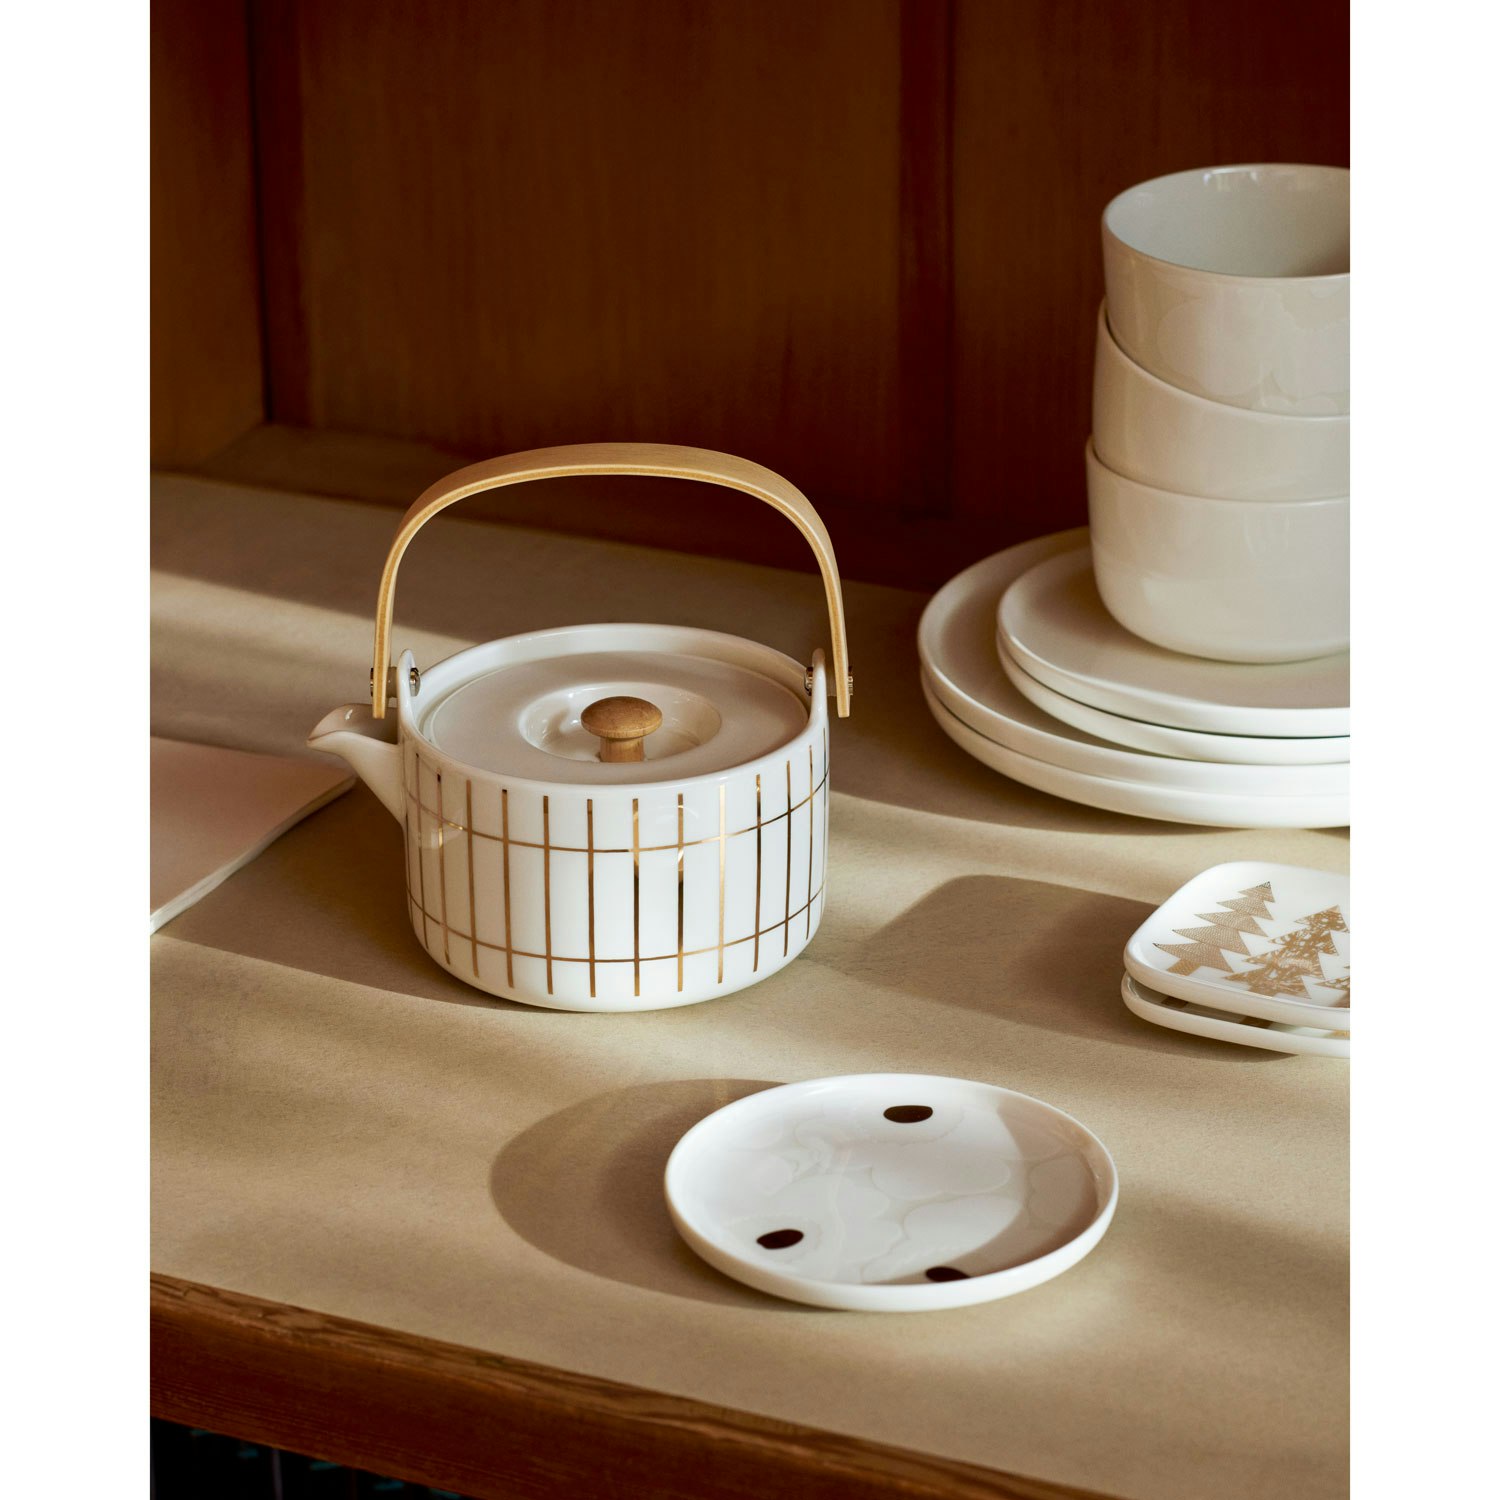 Tiiliskivi Teapot 7 dl, / White Gold   Marimekko @ RoyalDesign